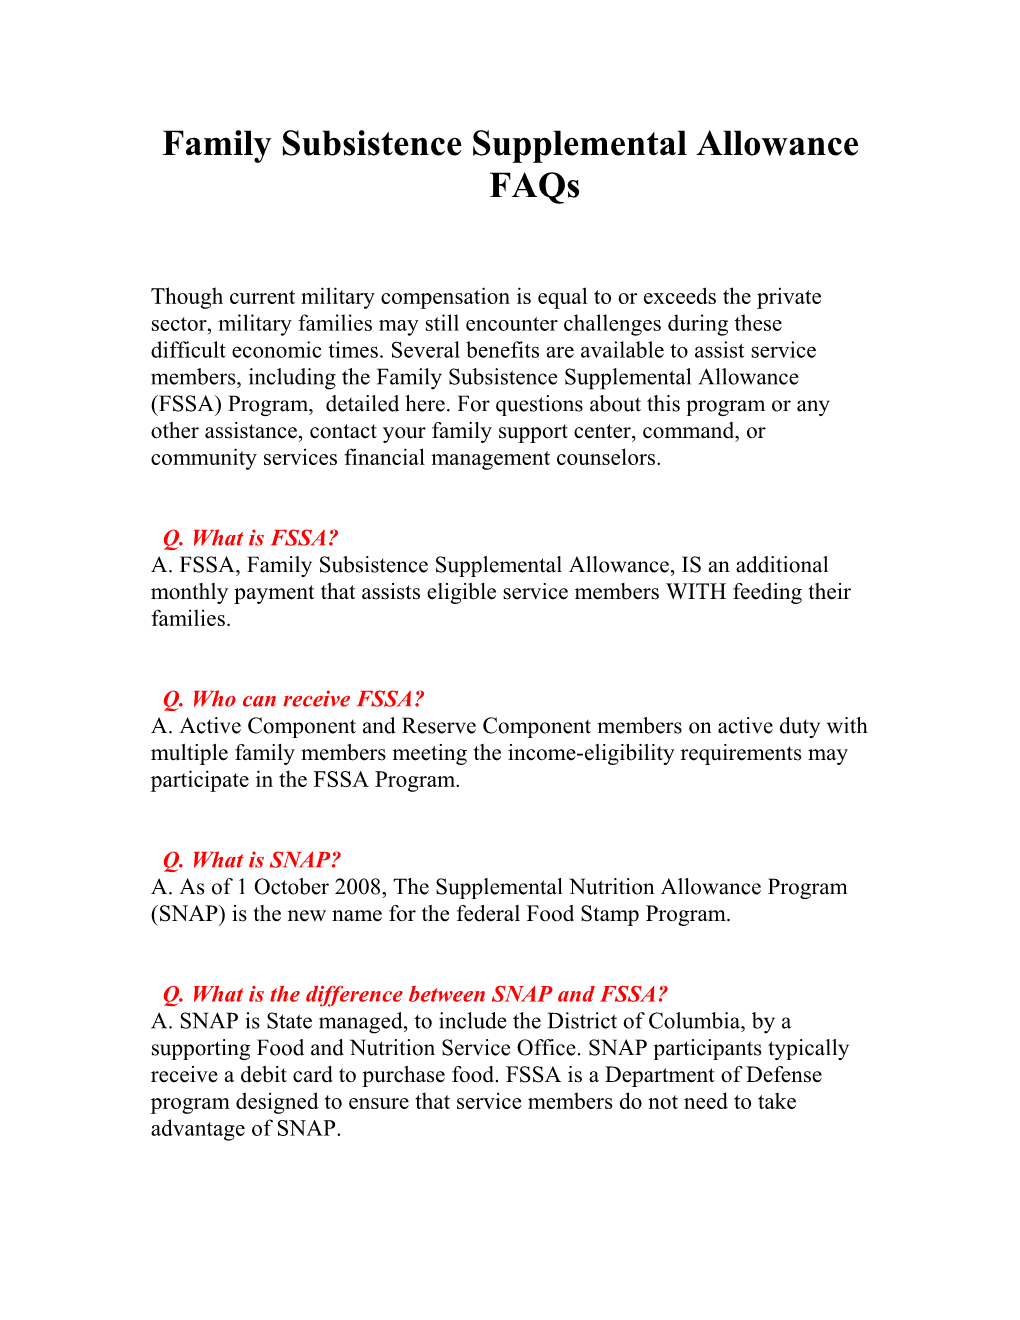 Family Subsistence Supplemental Allowance Faqs